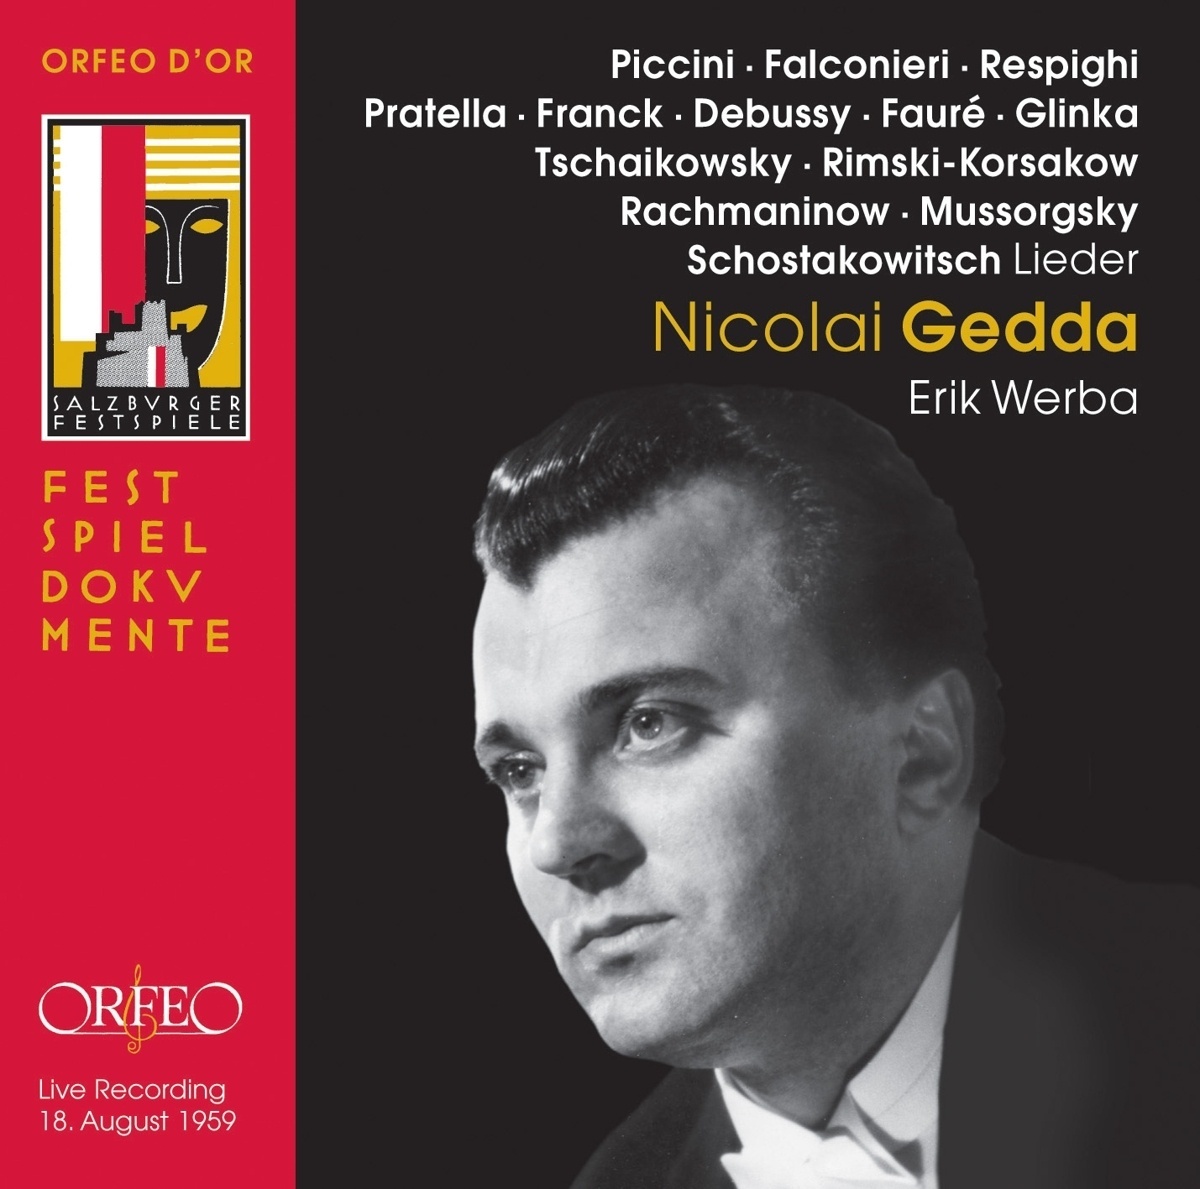 Nicolai Gedda Salzburger Liederabend 1959 - Nicolai Gedda  Erik Werba. (CD)